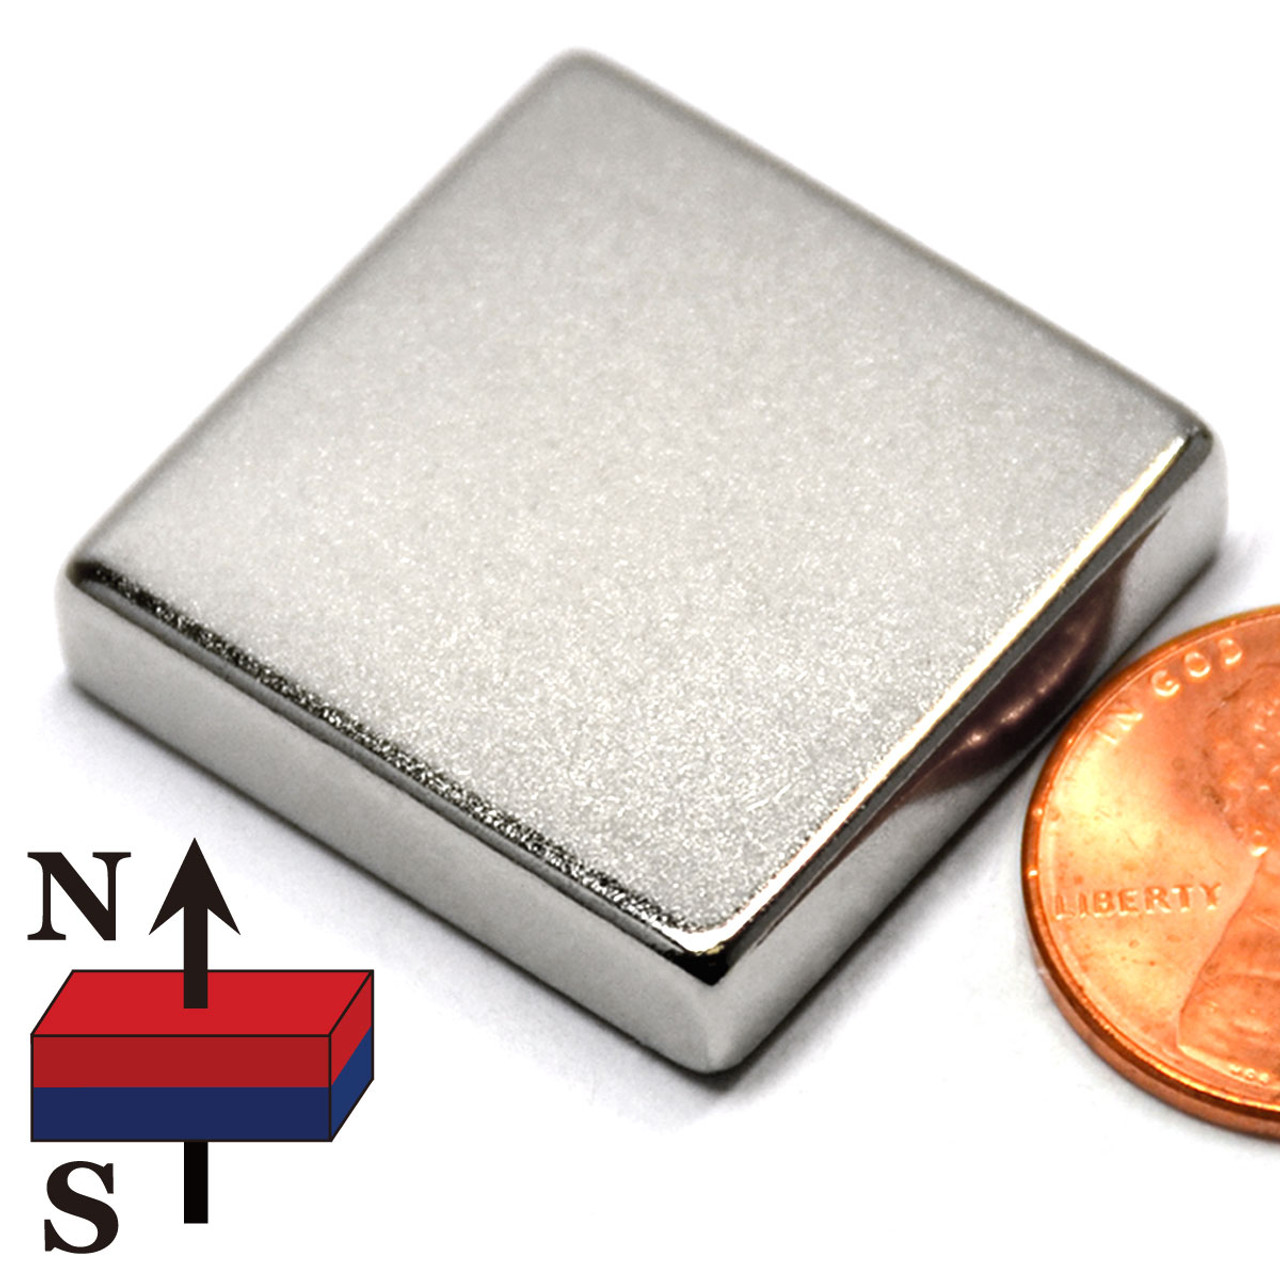 1"X1"X1/4" NdFeB Rare Earth Magnets